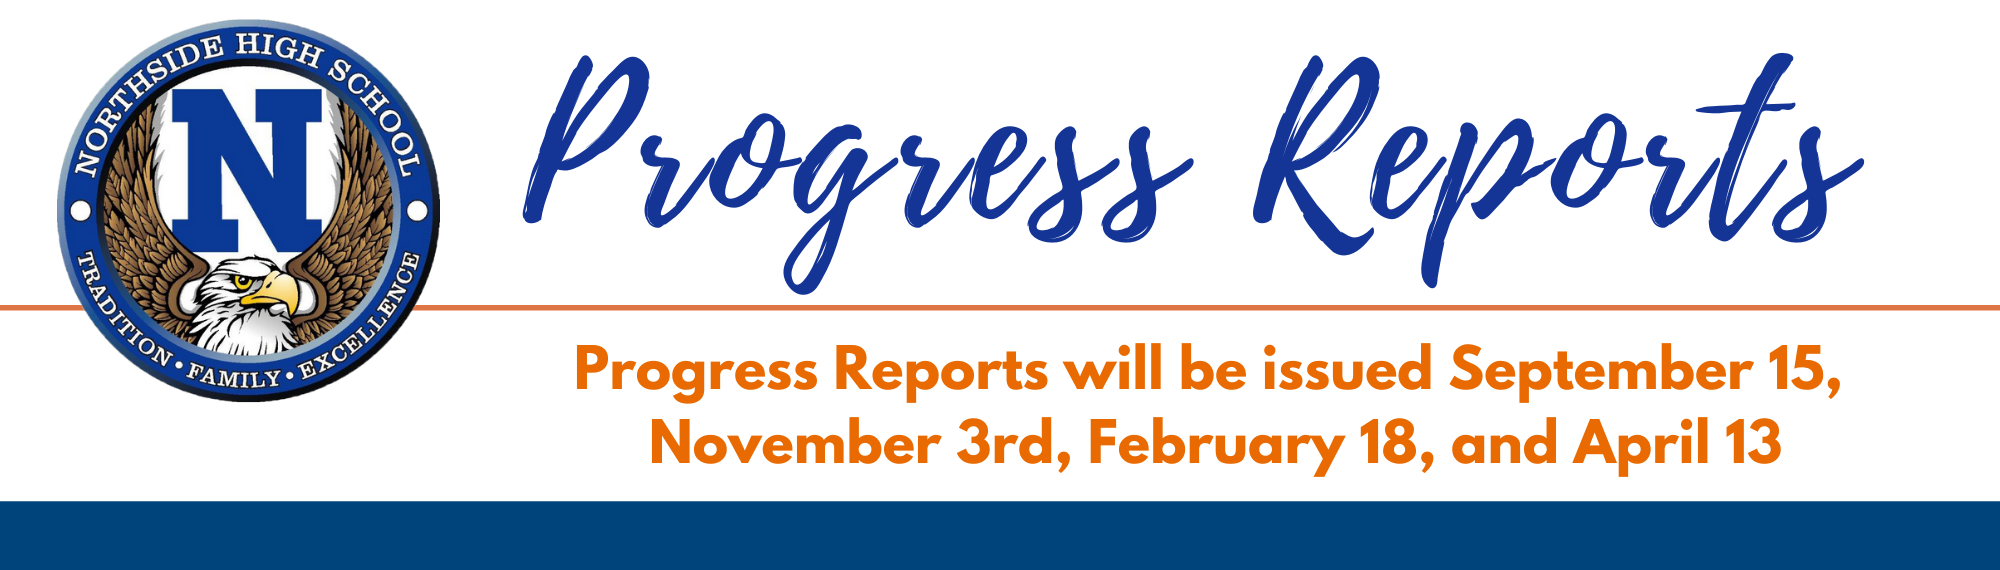 Progress Report Dates